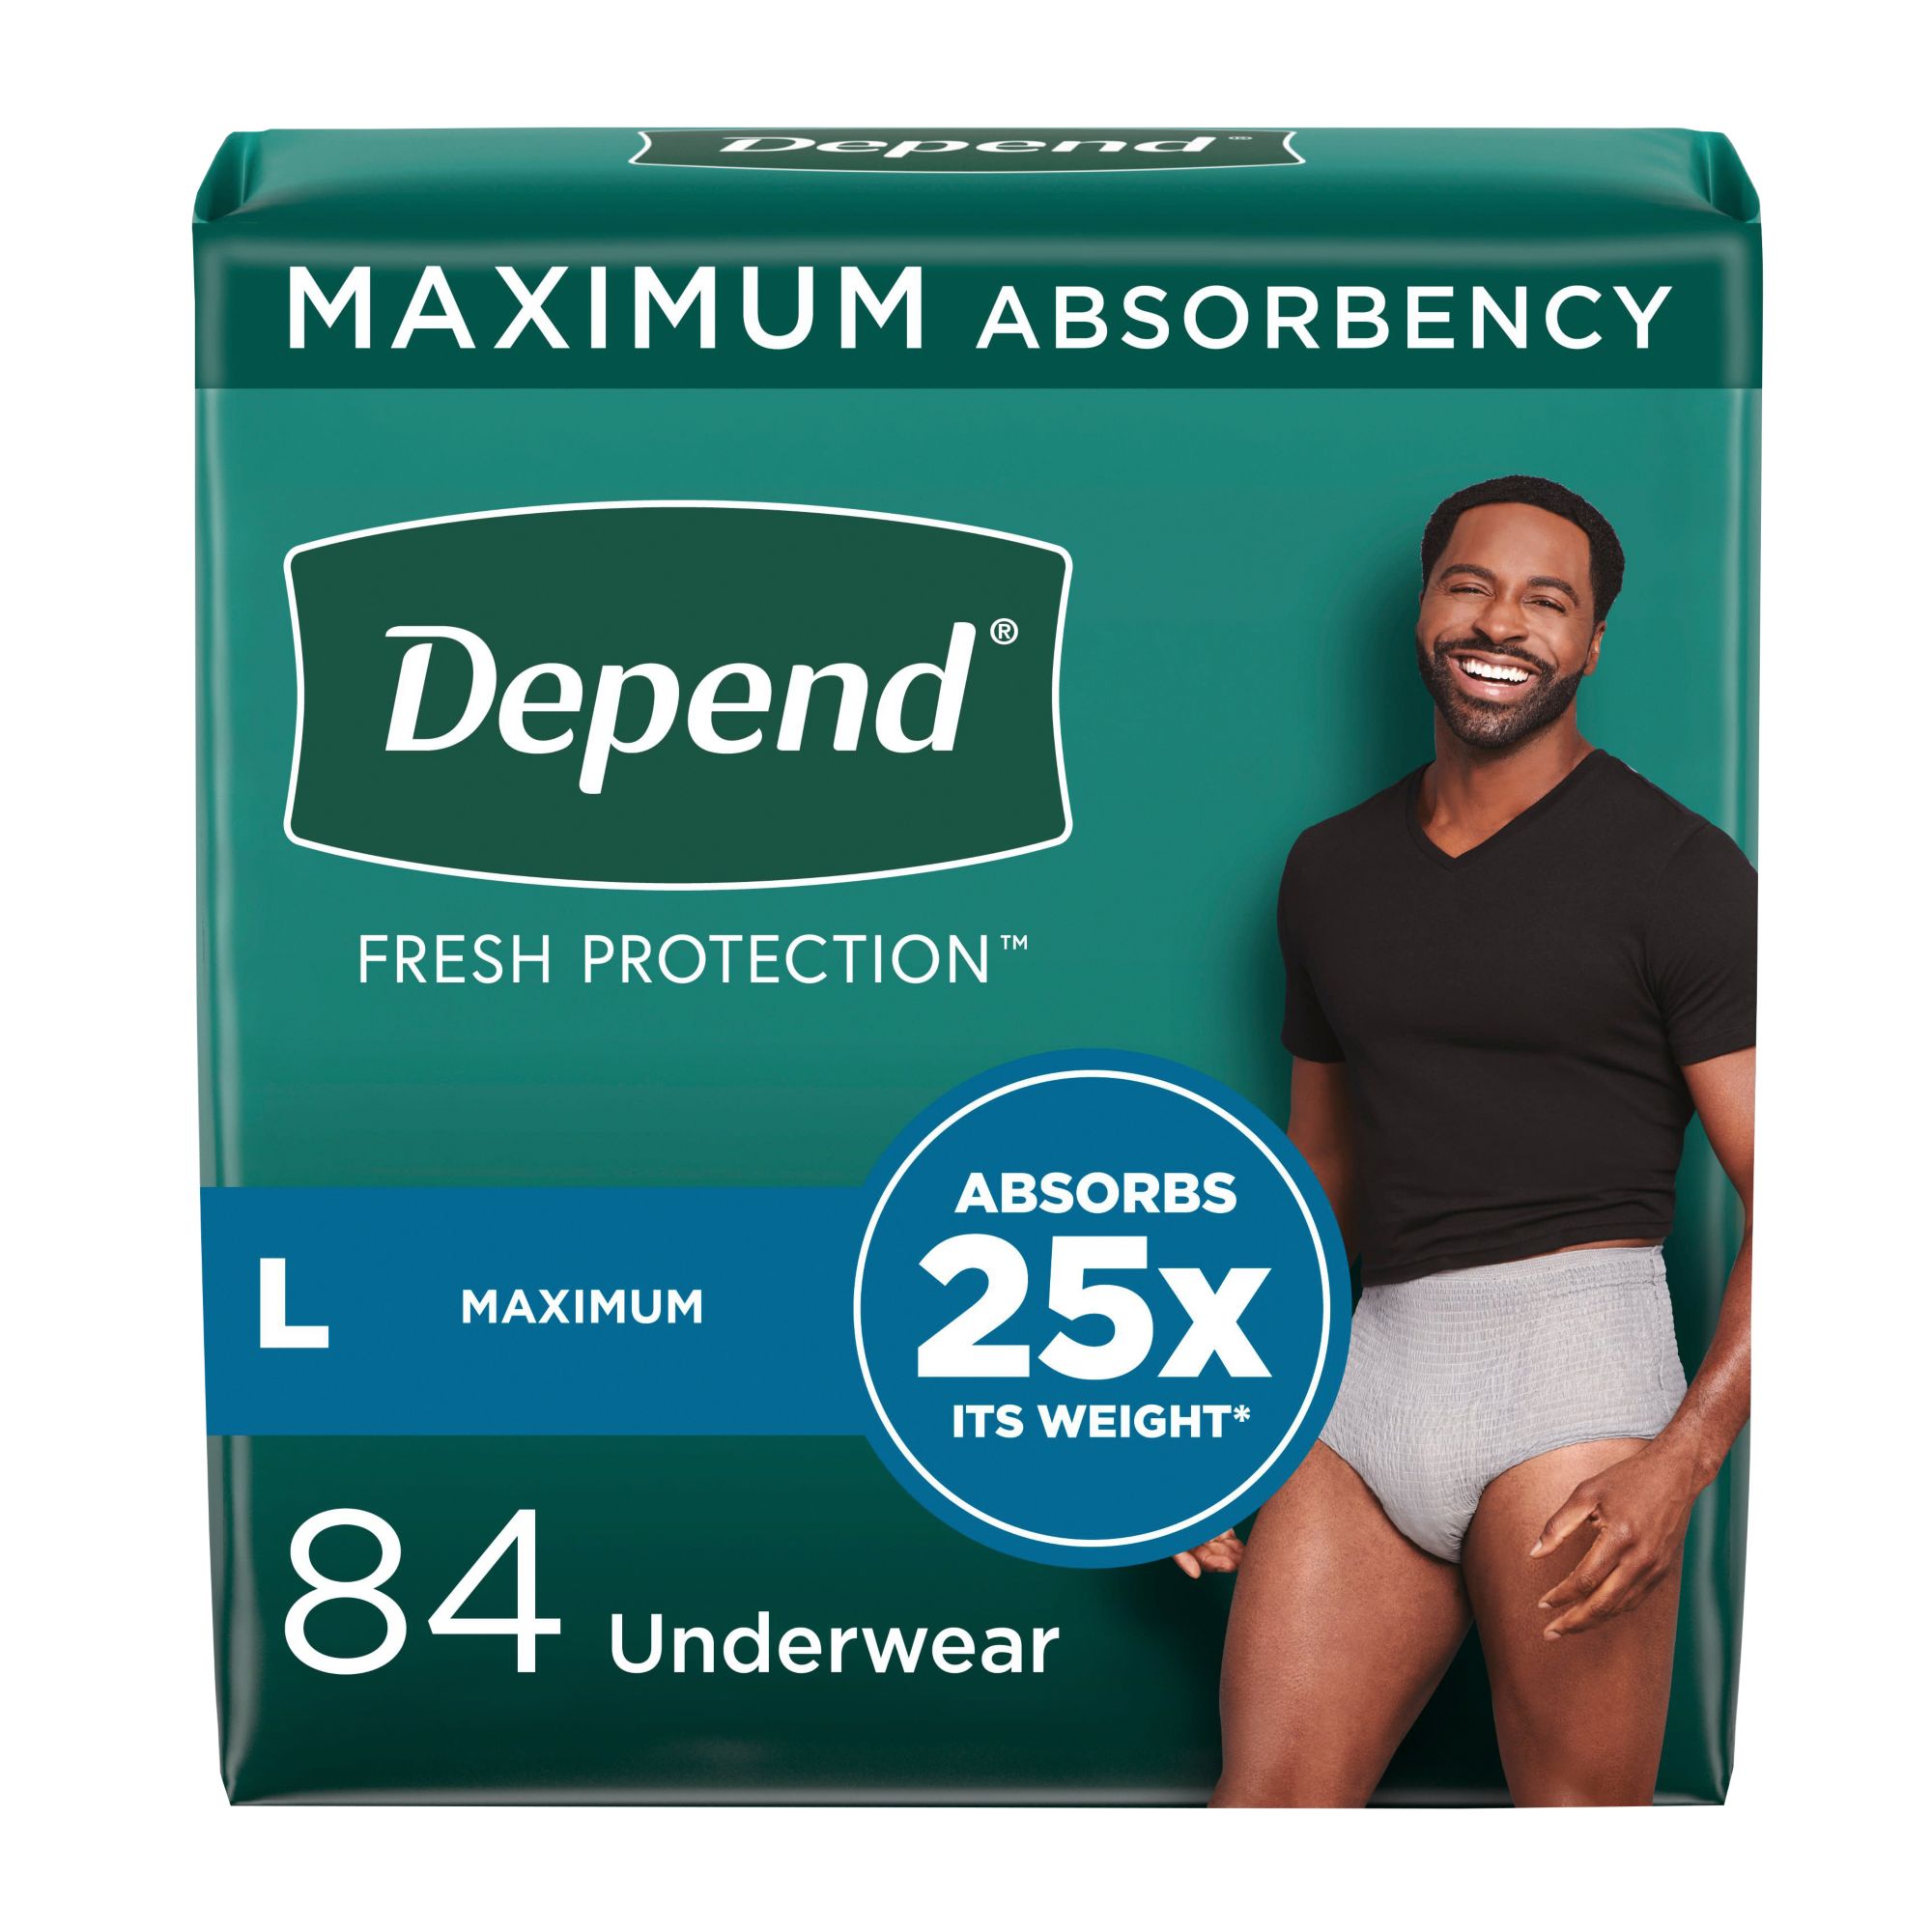 Carer M67 incontinence underwear for men 